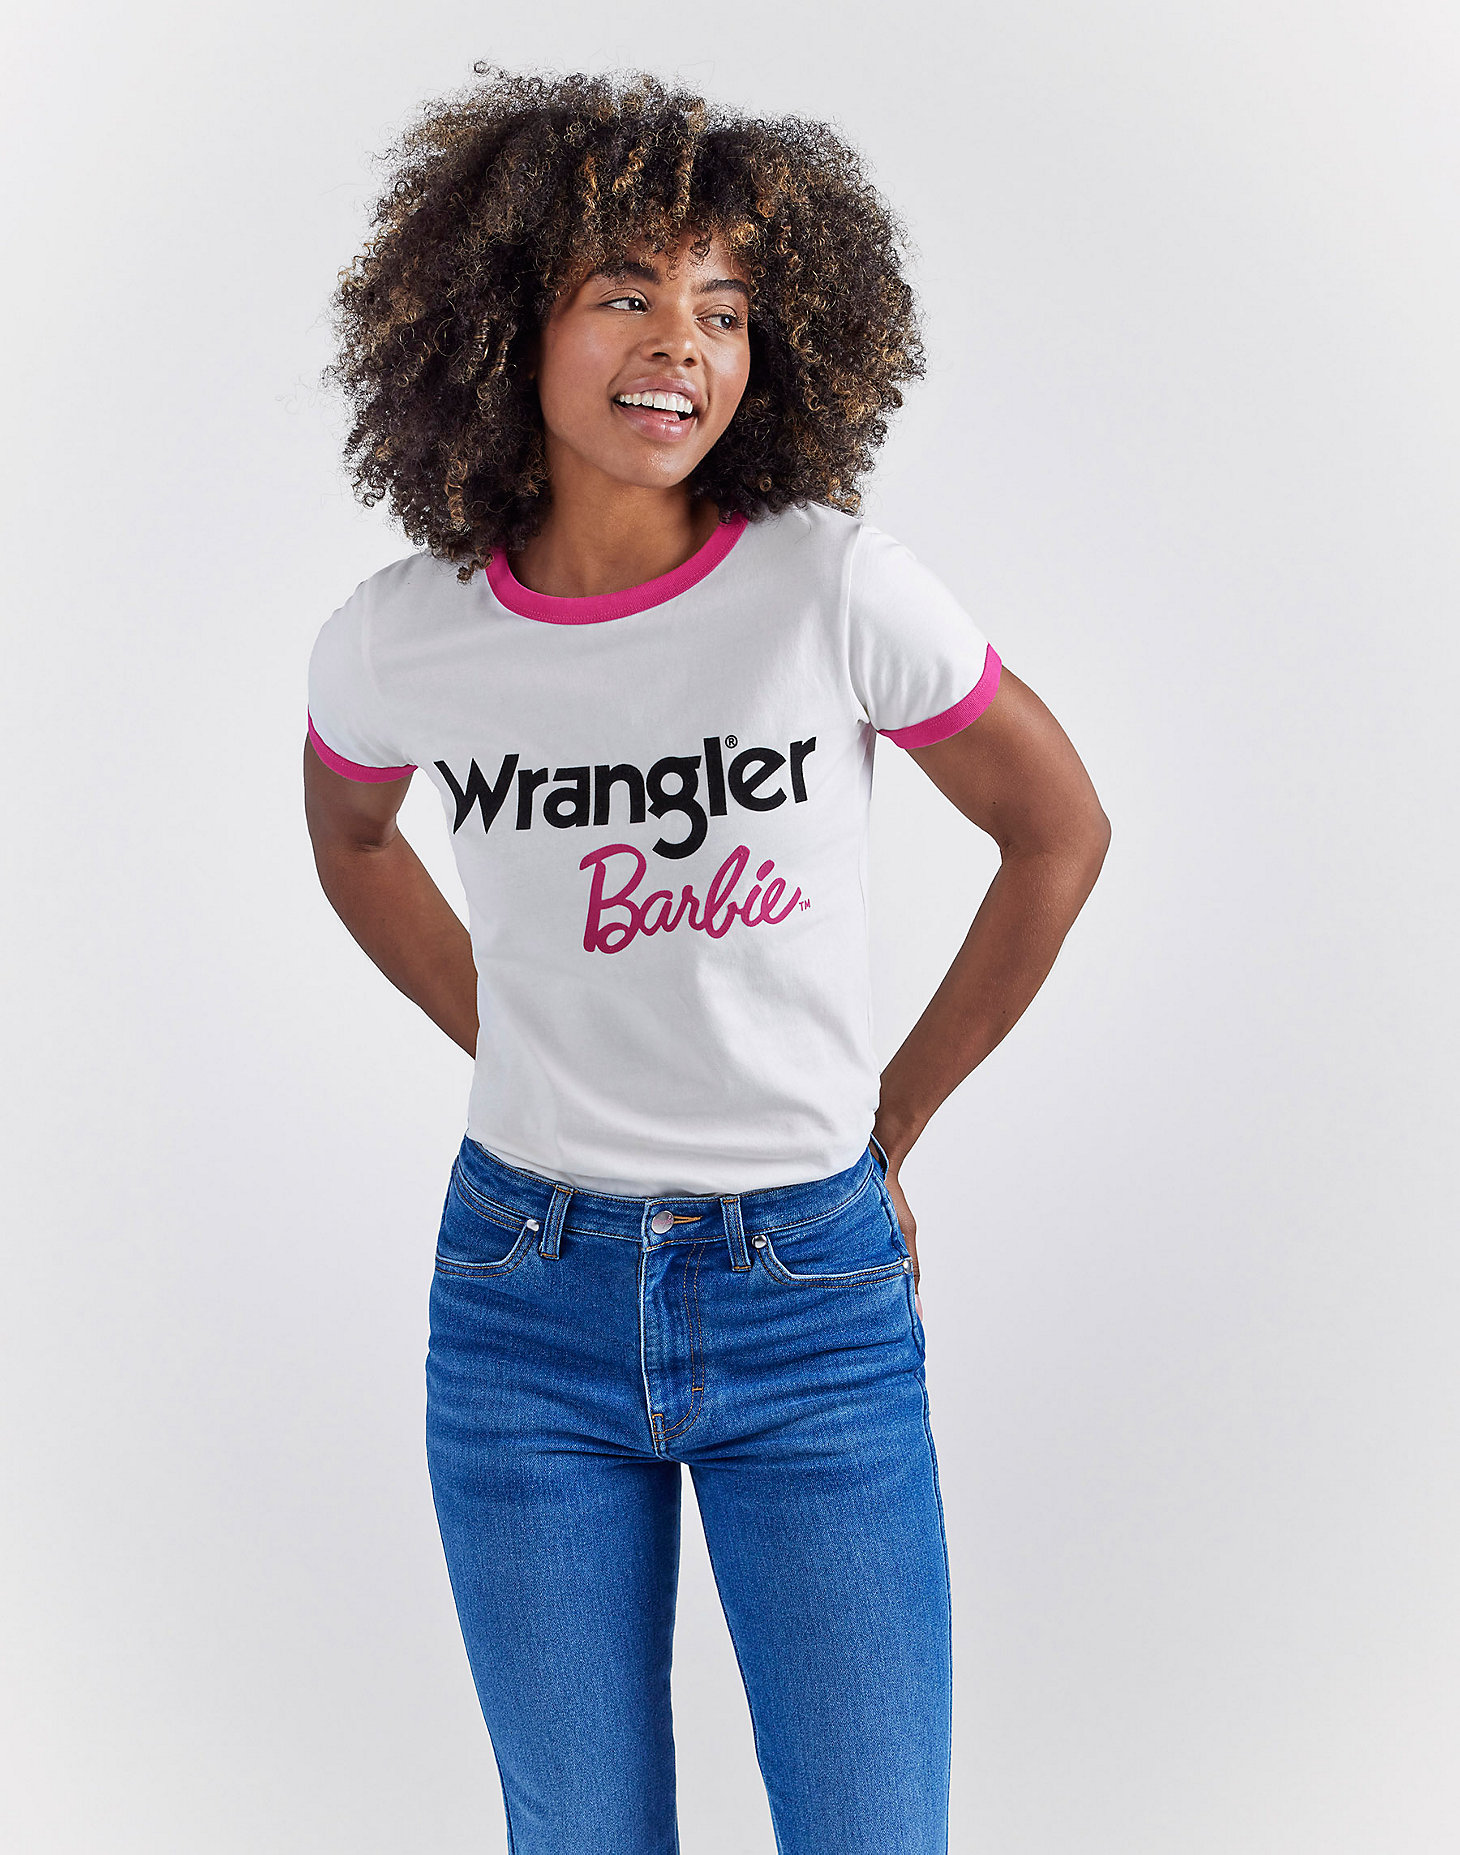 Wrangler x Barbie™ Logos Slim Ringer Tee in Worn White alternative view 4